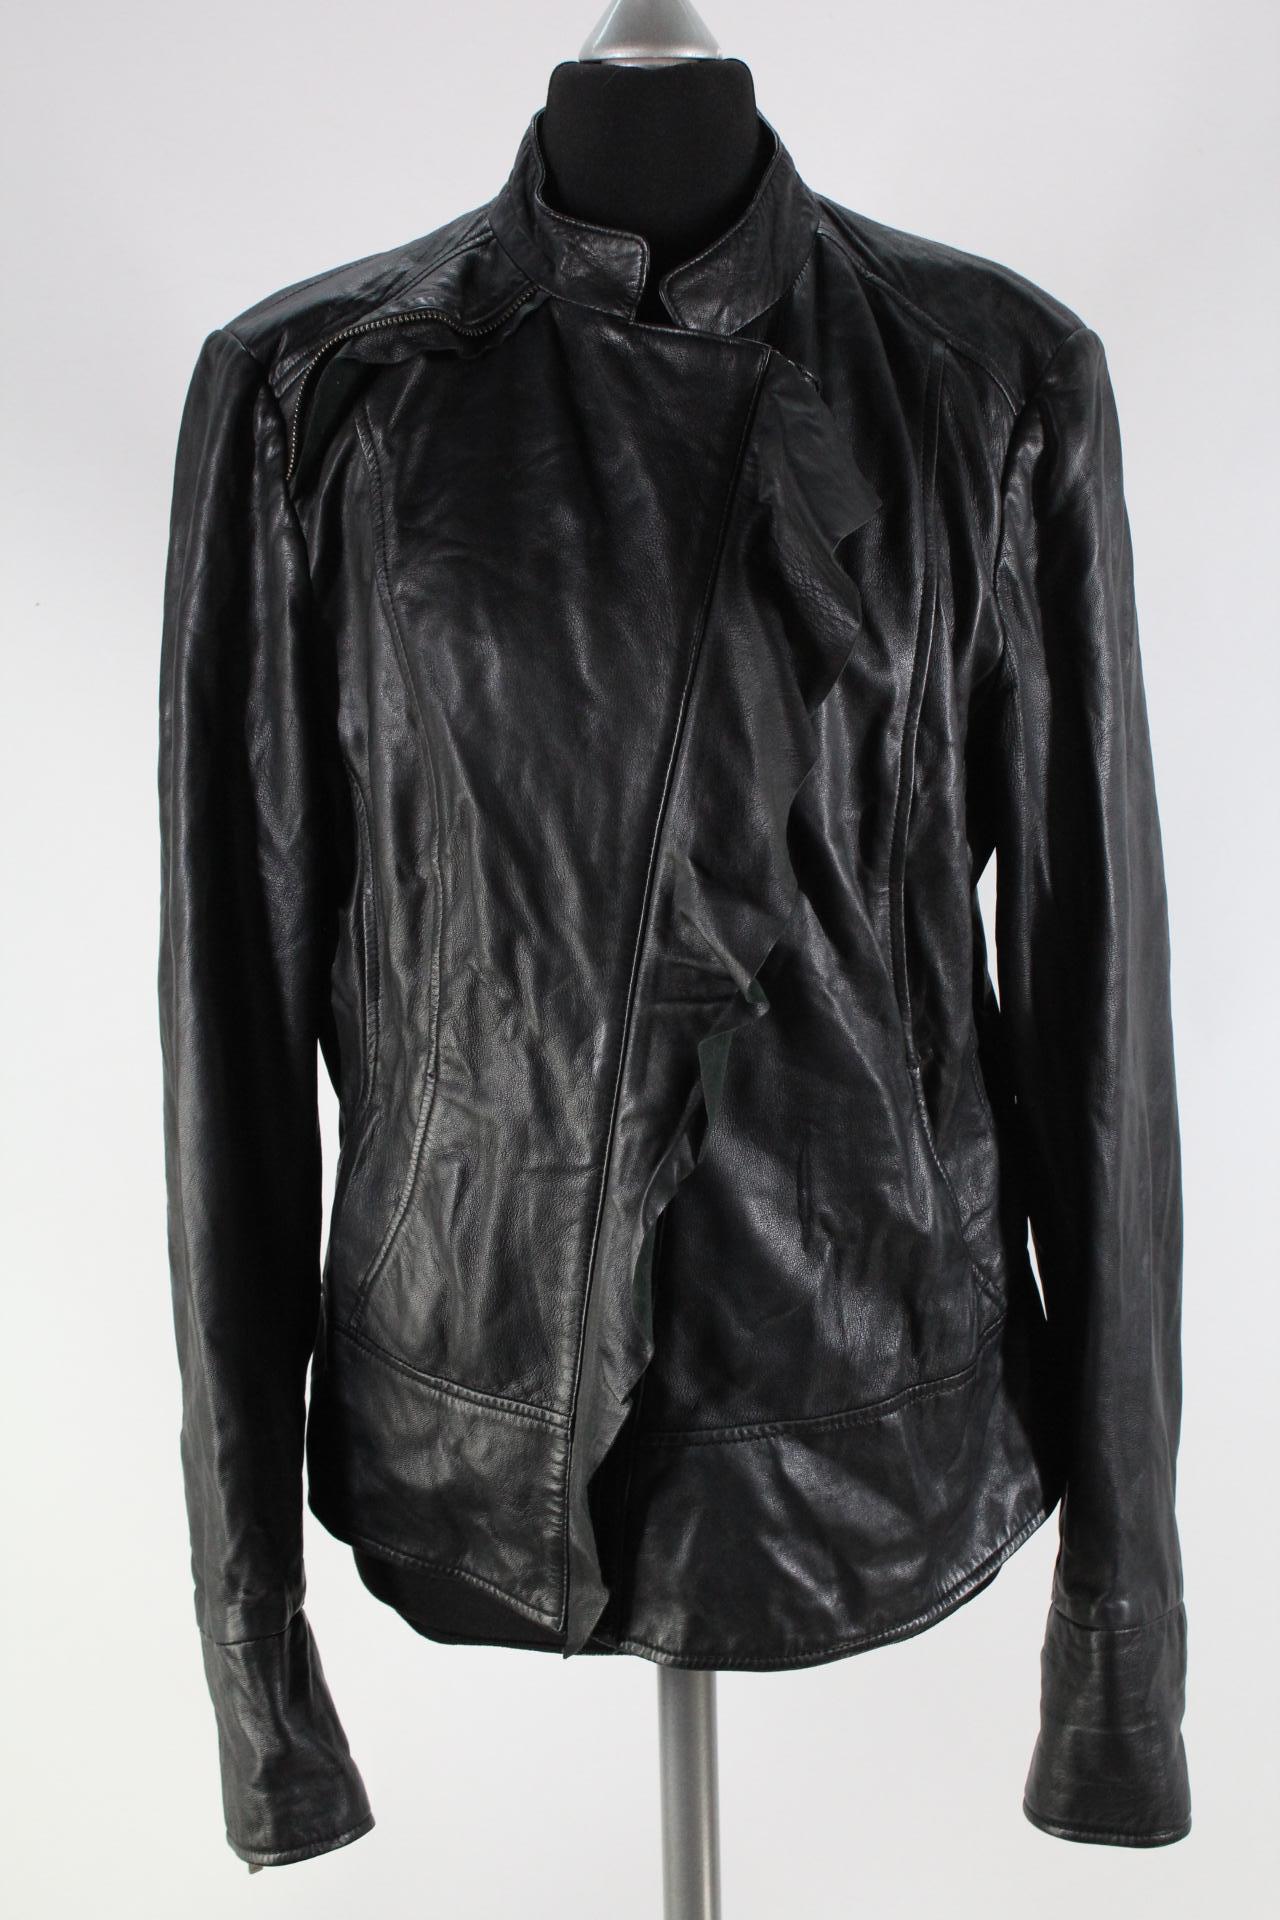 Mexx Damen-Lederjacke schwarz Größe 42